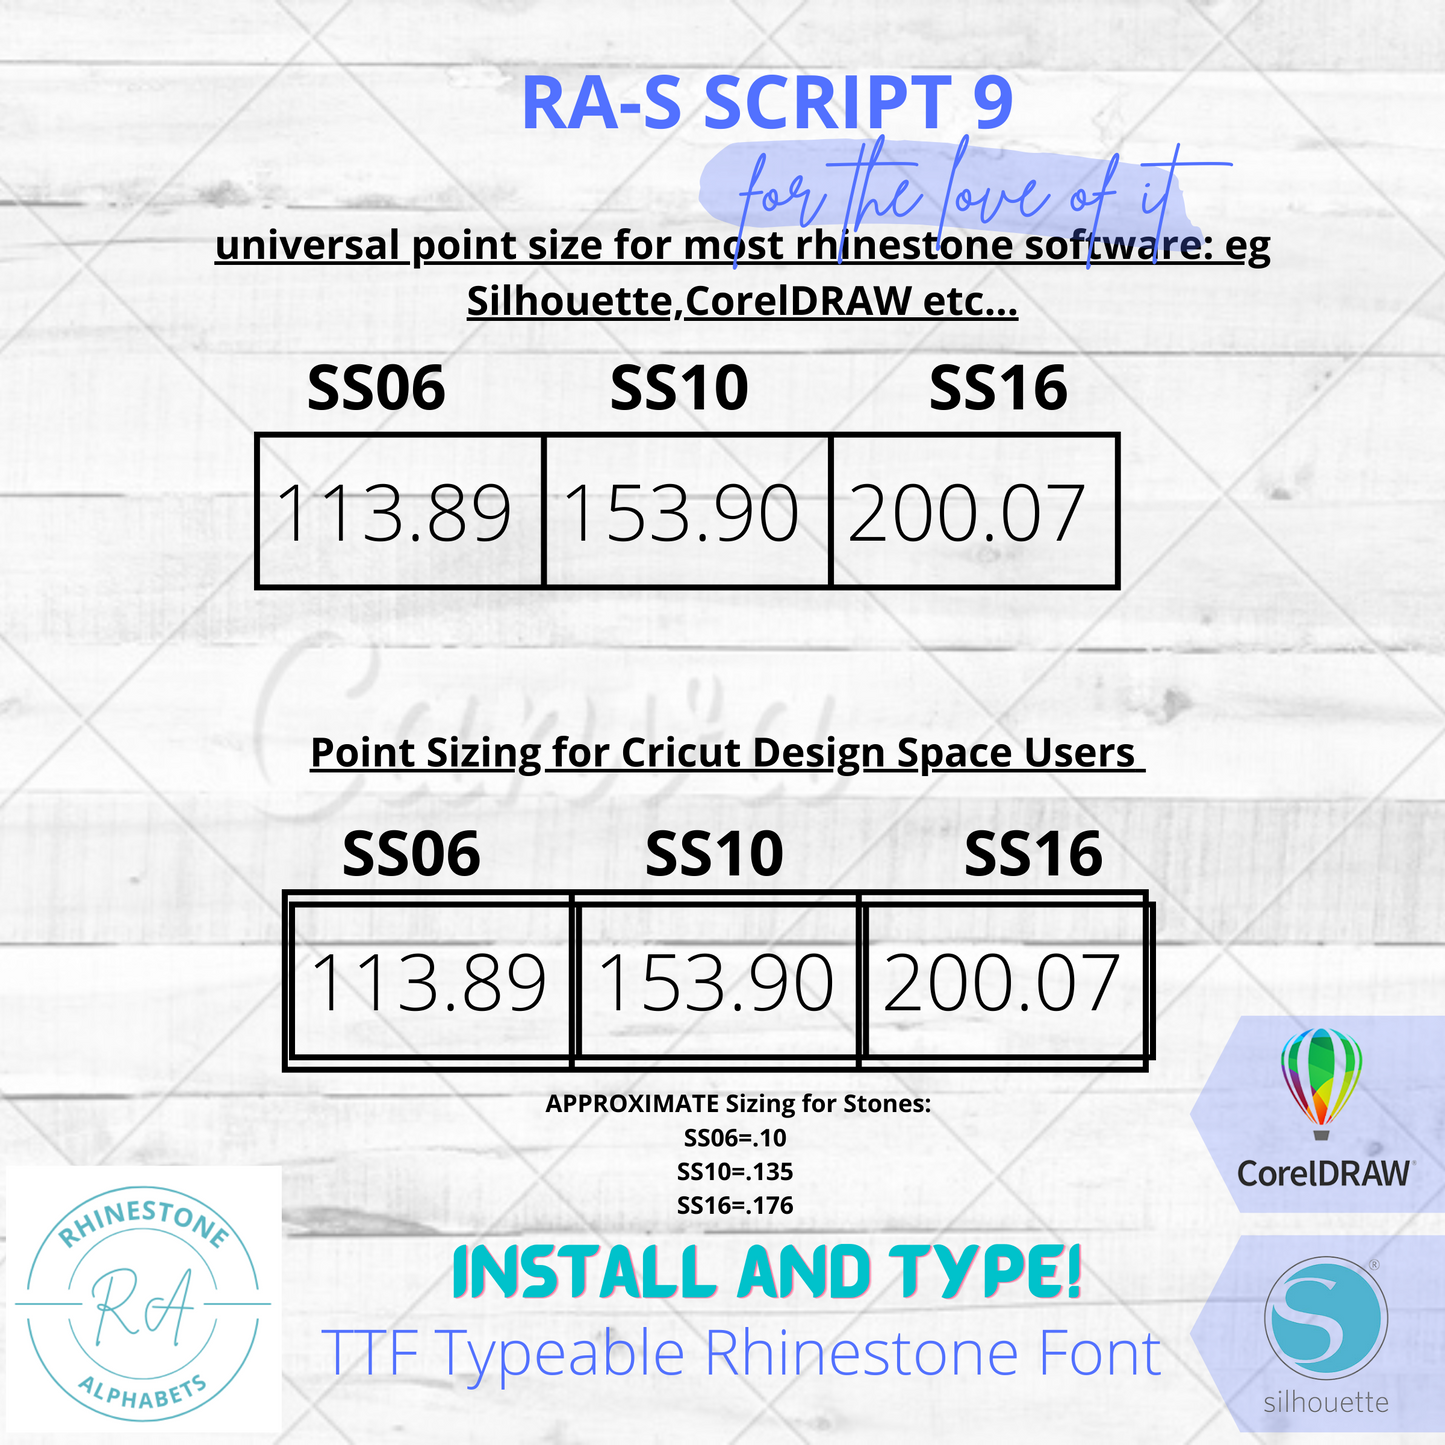 RA-S Script 9